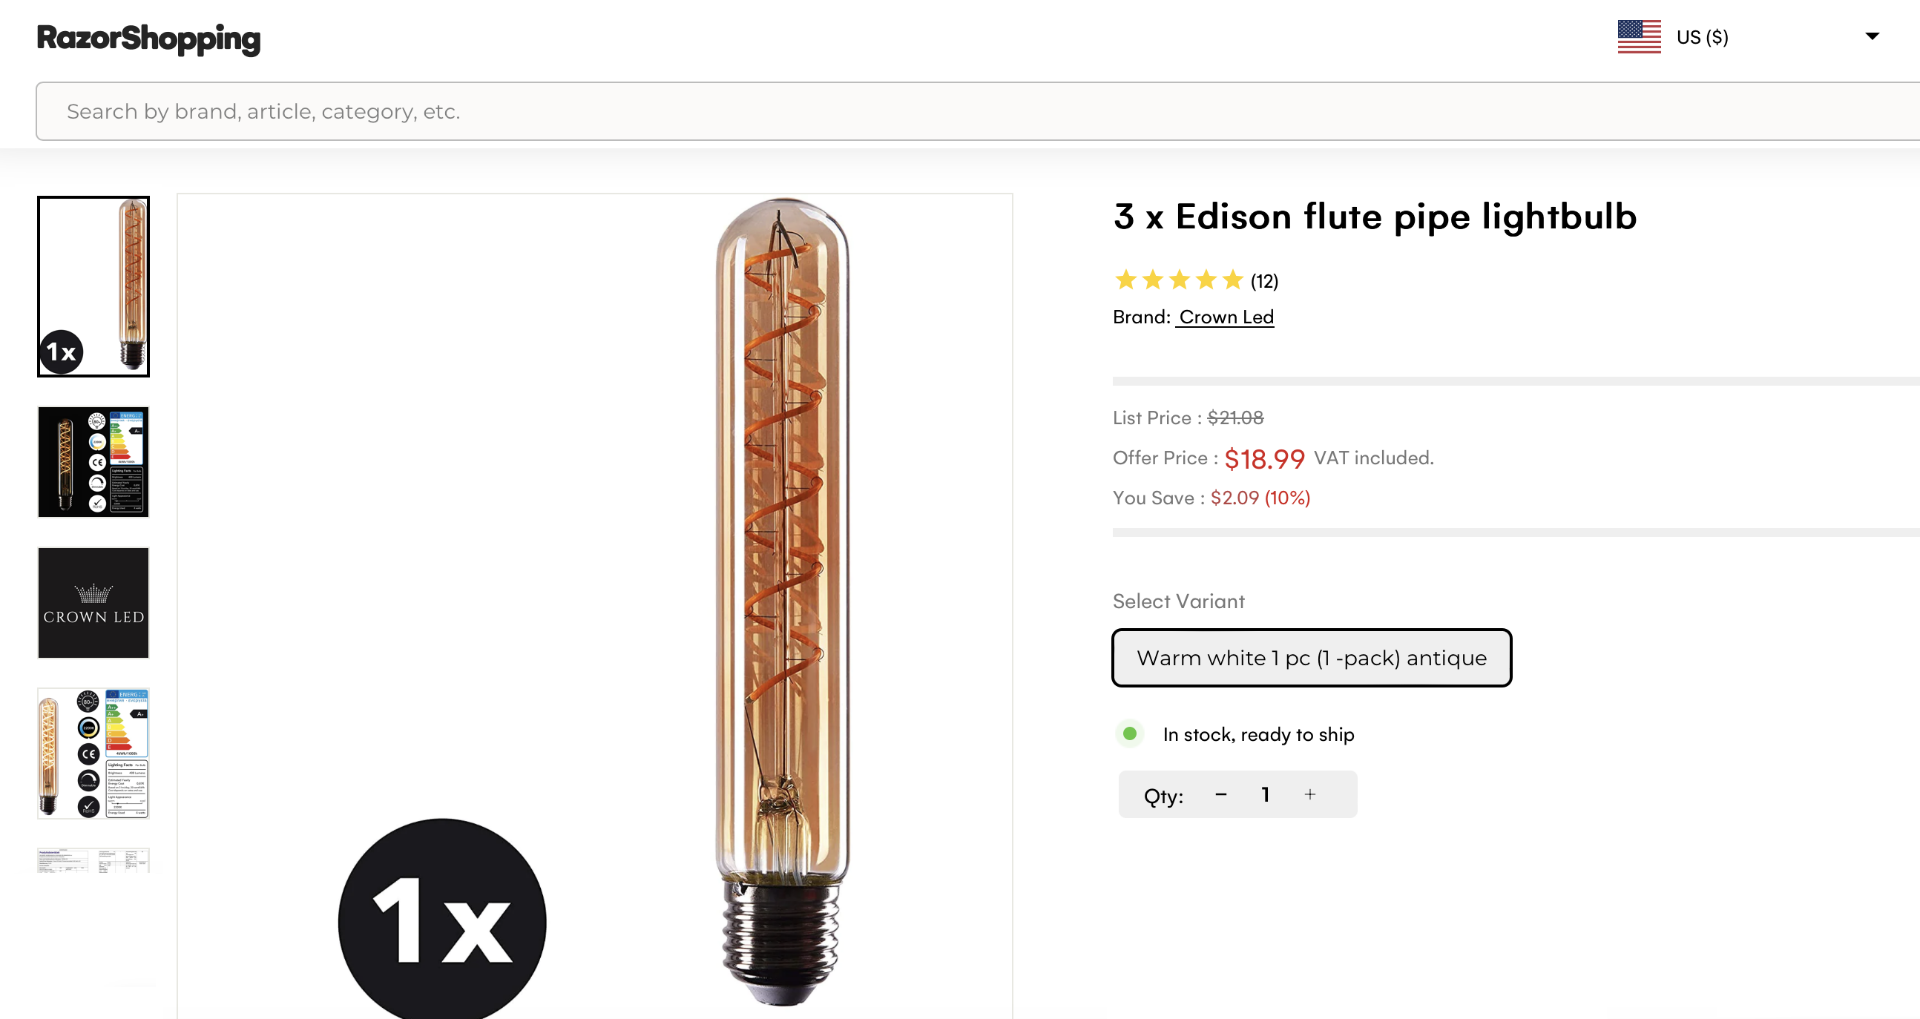 24 x CROWN LED Edison Flat Pipe Lightbulb 4W/40W Warm White - NEW & BOXED - BIG RRP! - Image 2 of 7